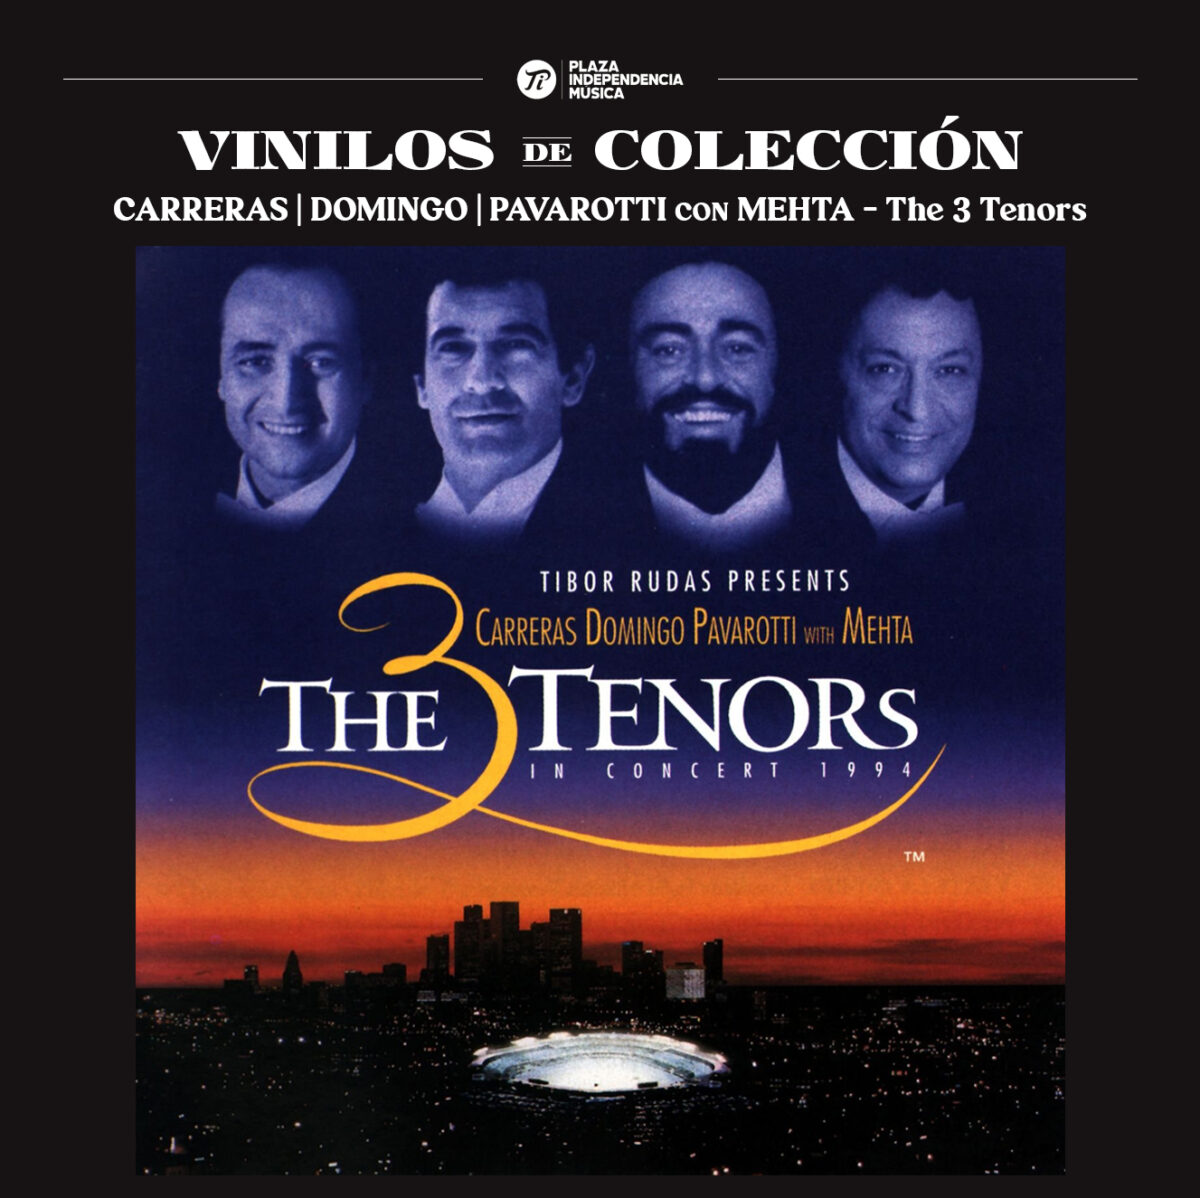 Carreras / Domingo / Pavarotti with Mehta - The 3 Tenors In Concert 1994 2LPs+LIBRO